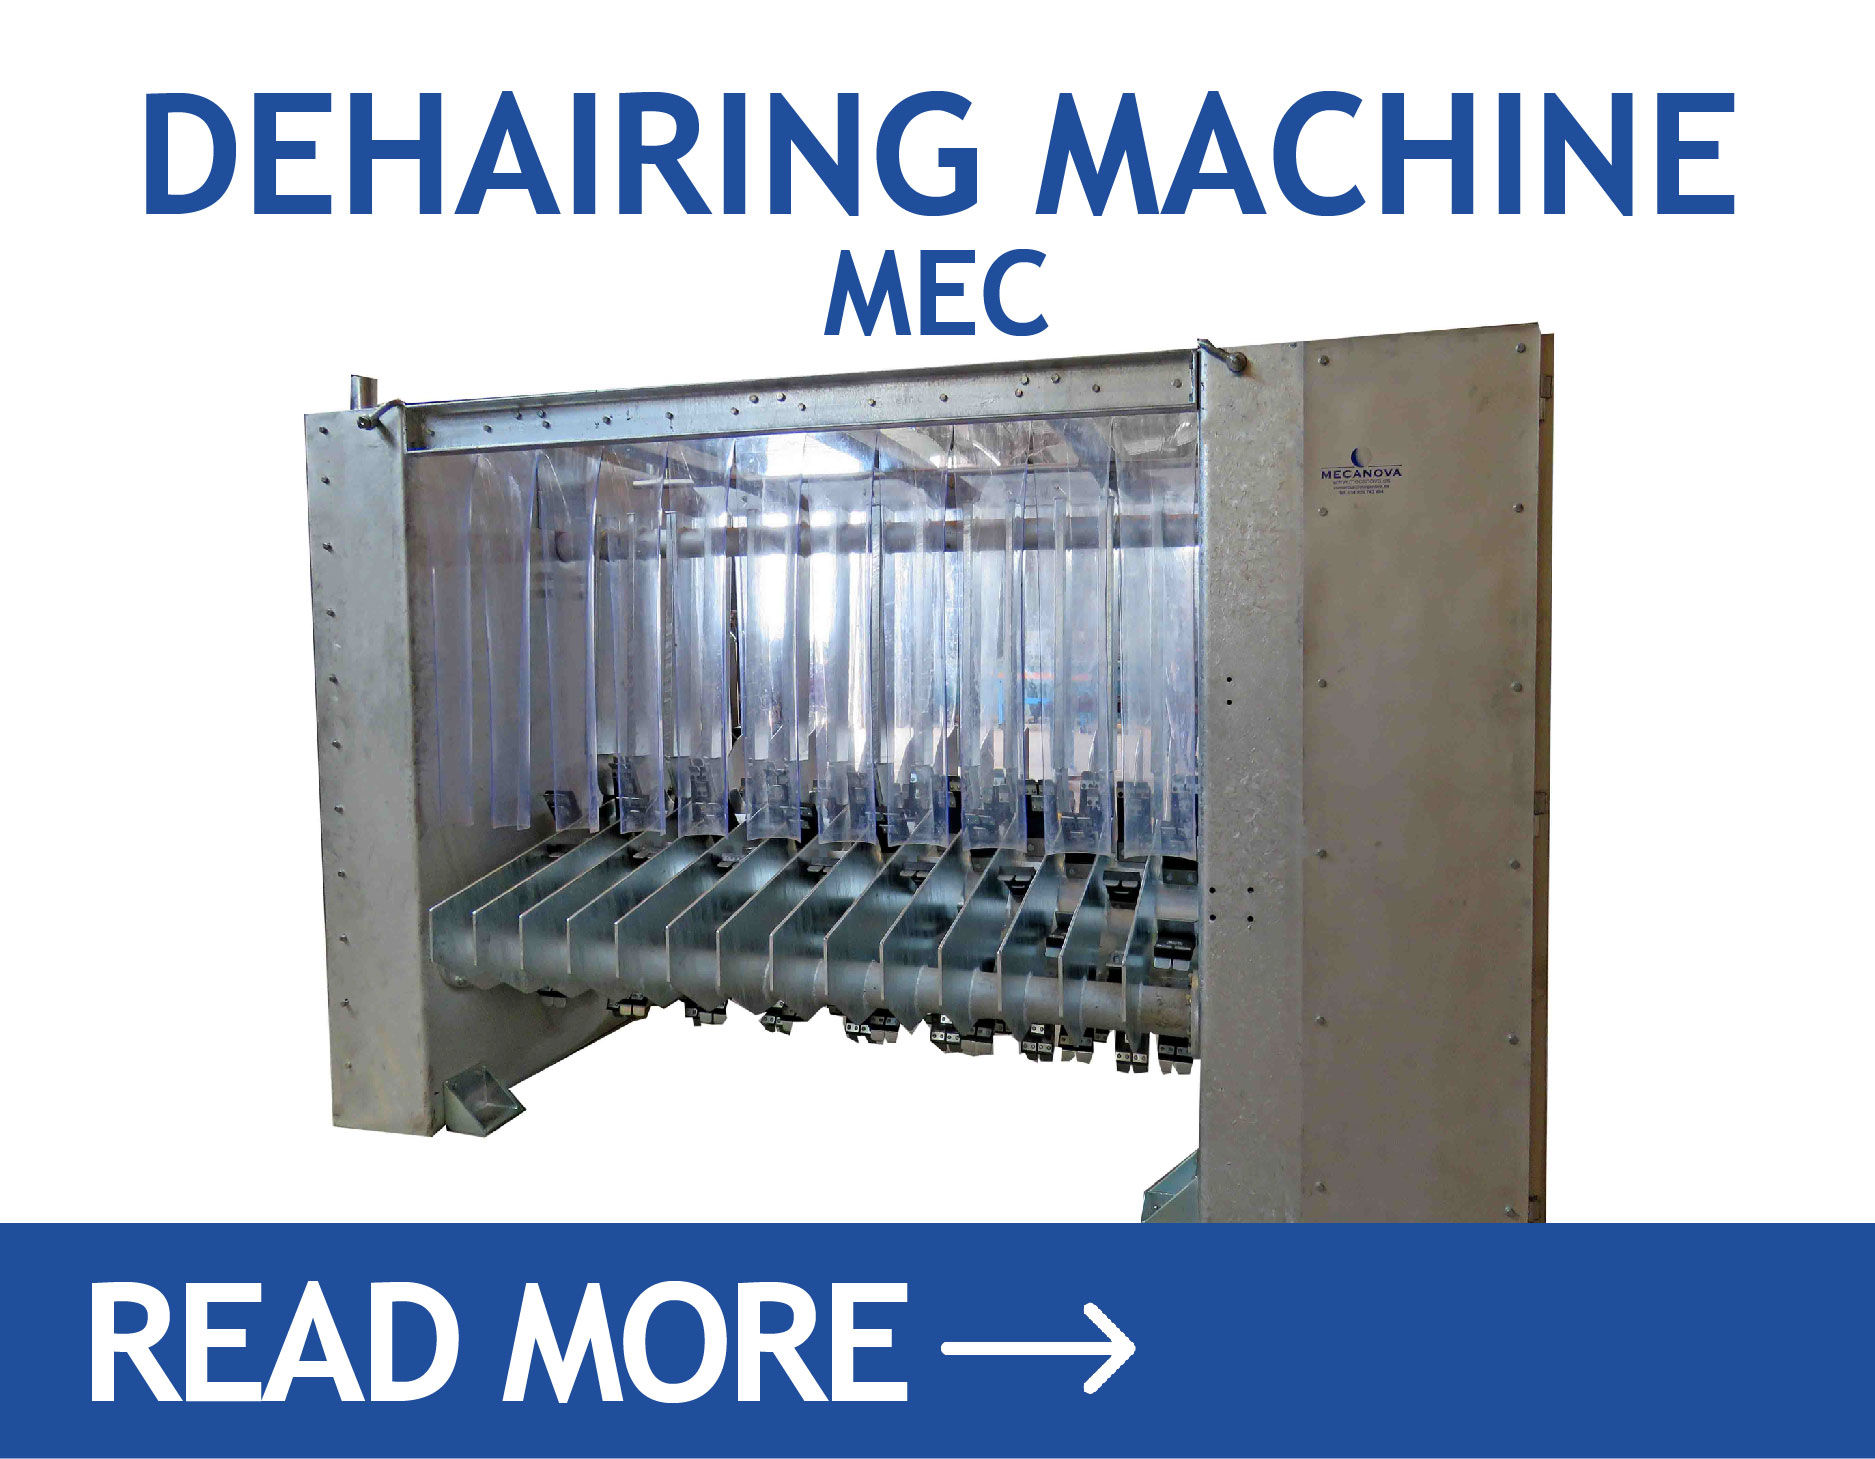 PIG DEHAIRING MACHINE MEC